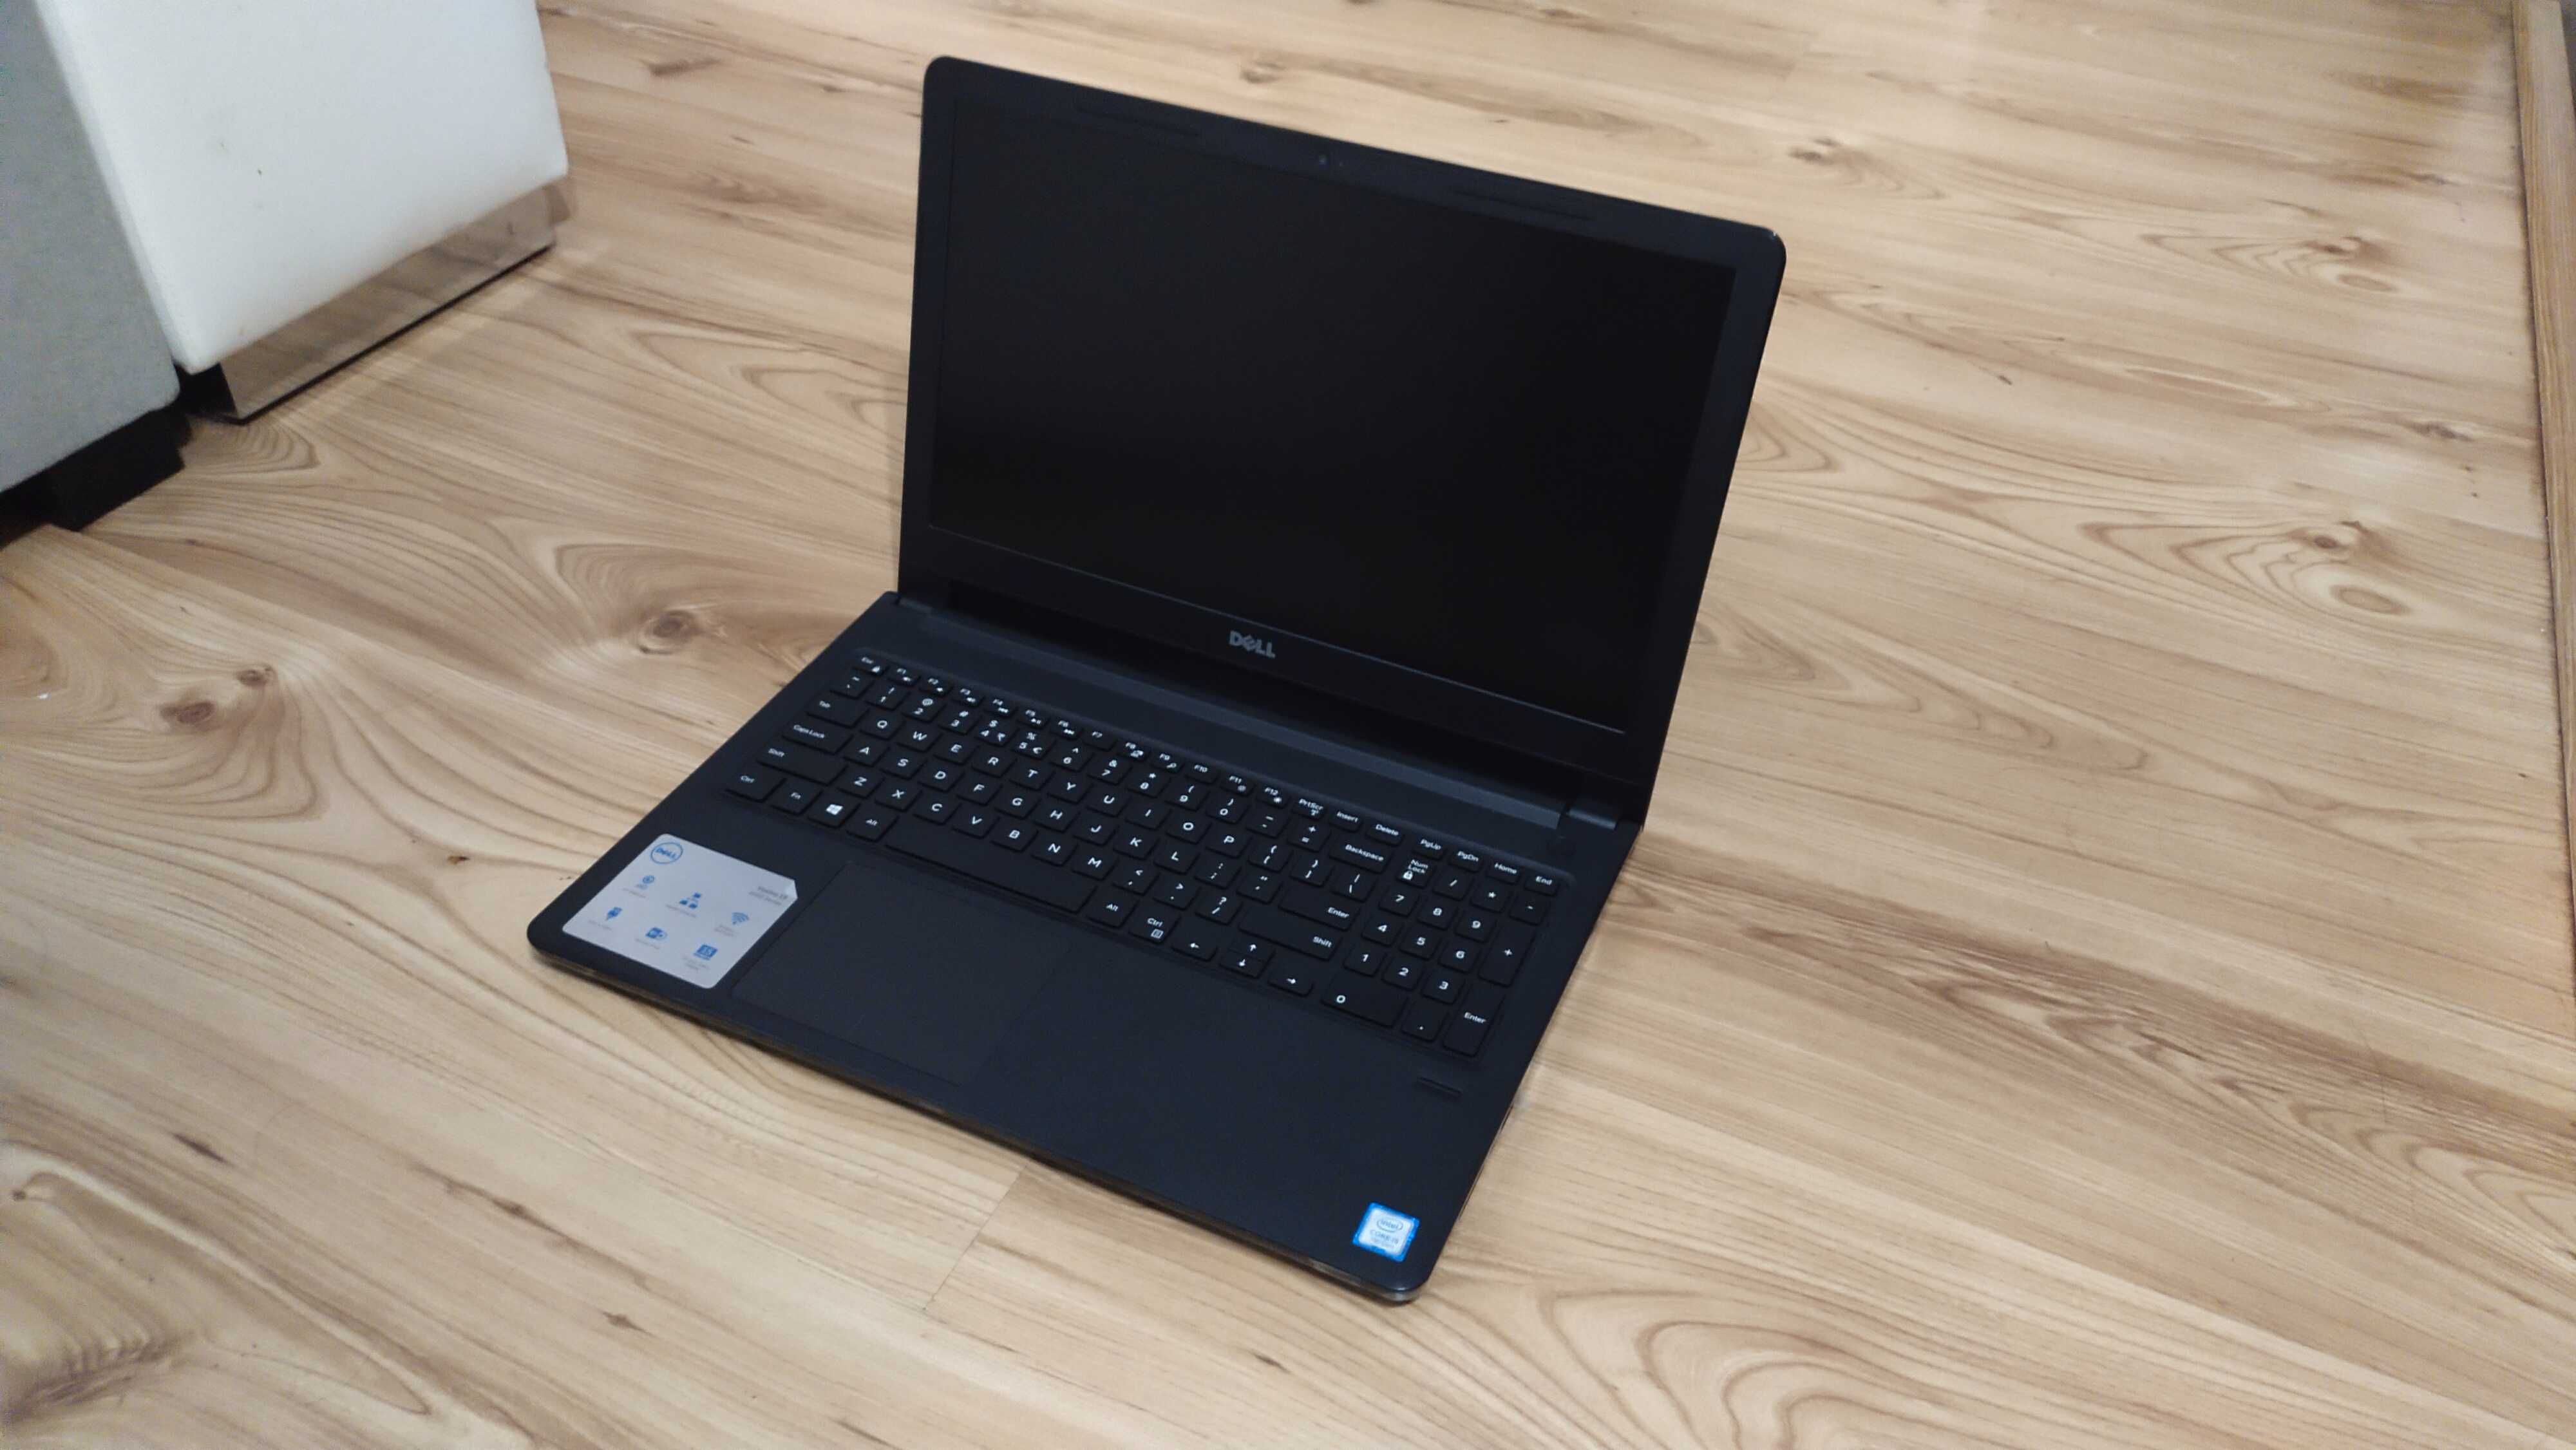 Nowy Laptop Dell Vostro 3568, Windows 10, procesor I5, dysk twardy 1Tb